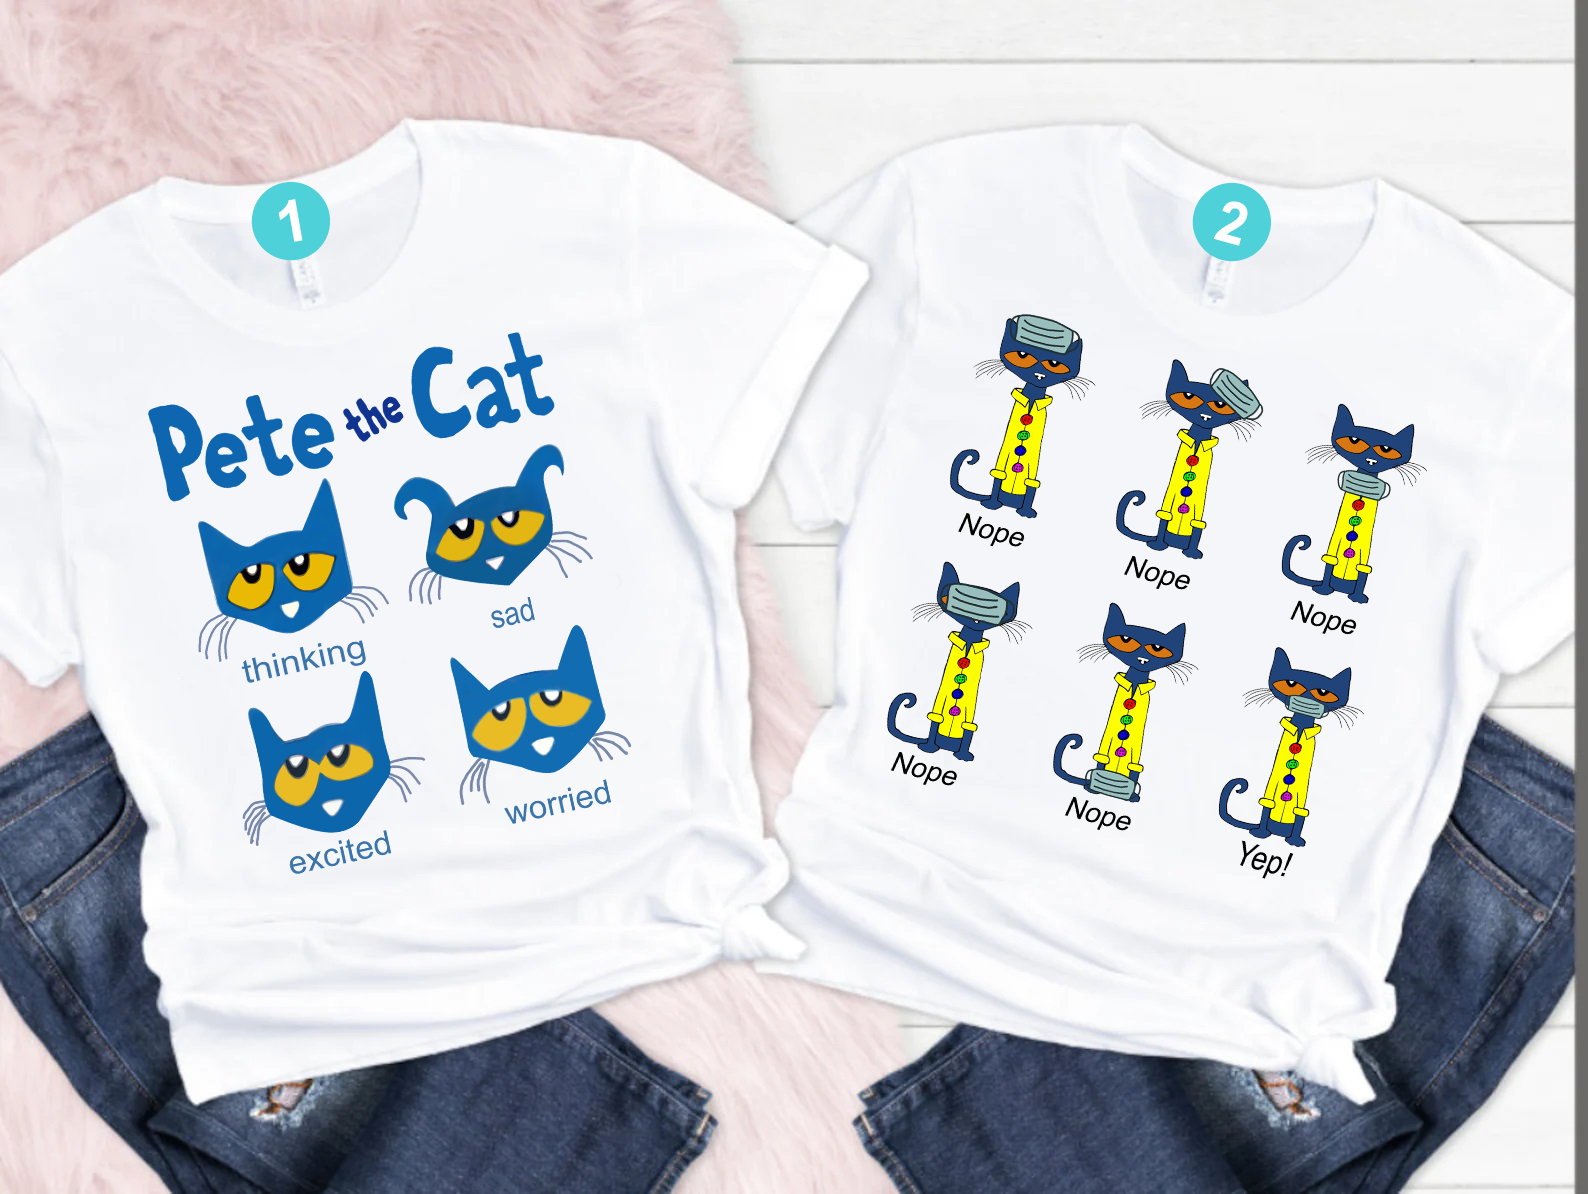 Pete The Cat Shirt, Pete The Cat Birthday Shirt, Groovy Family Shirt, cute Pete The Cat gift, Pete The Cat birthday shirt